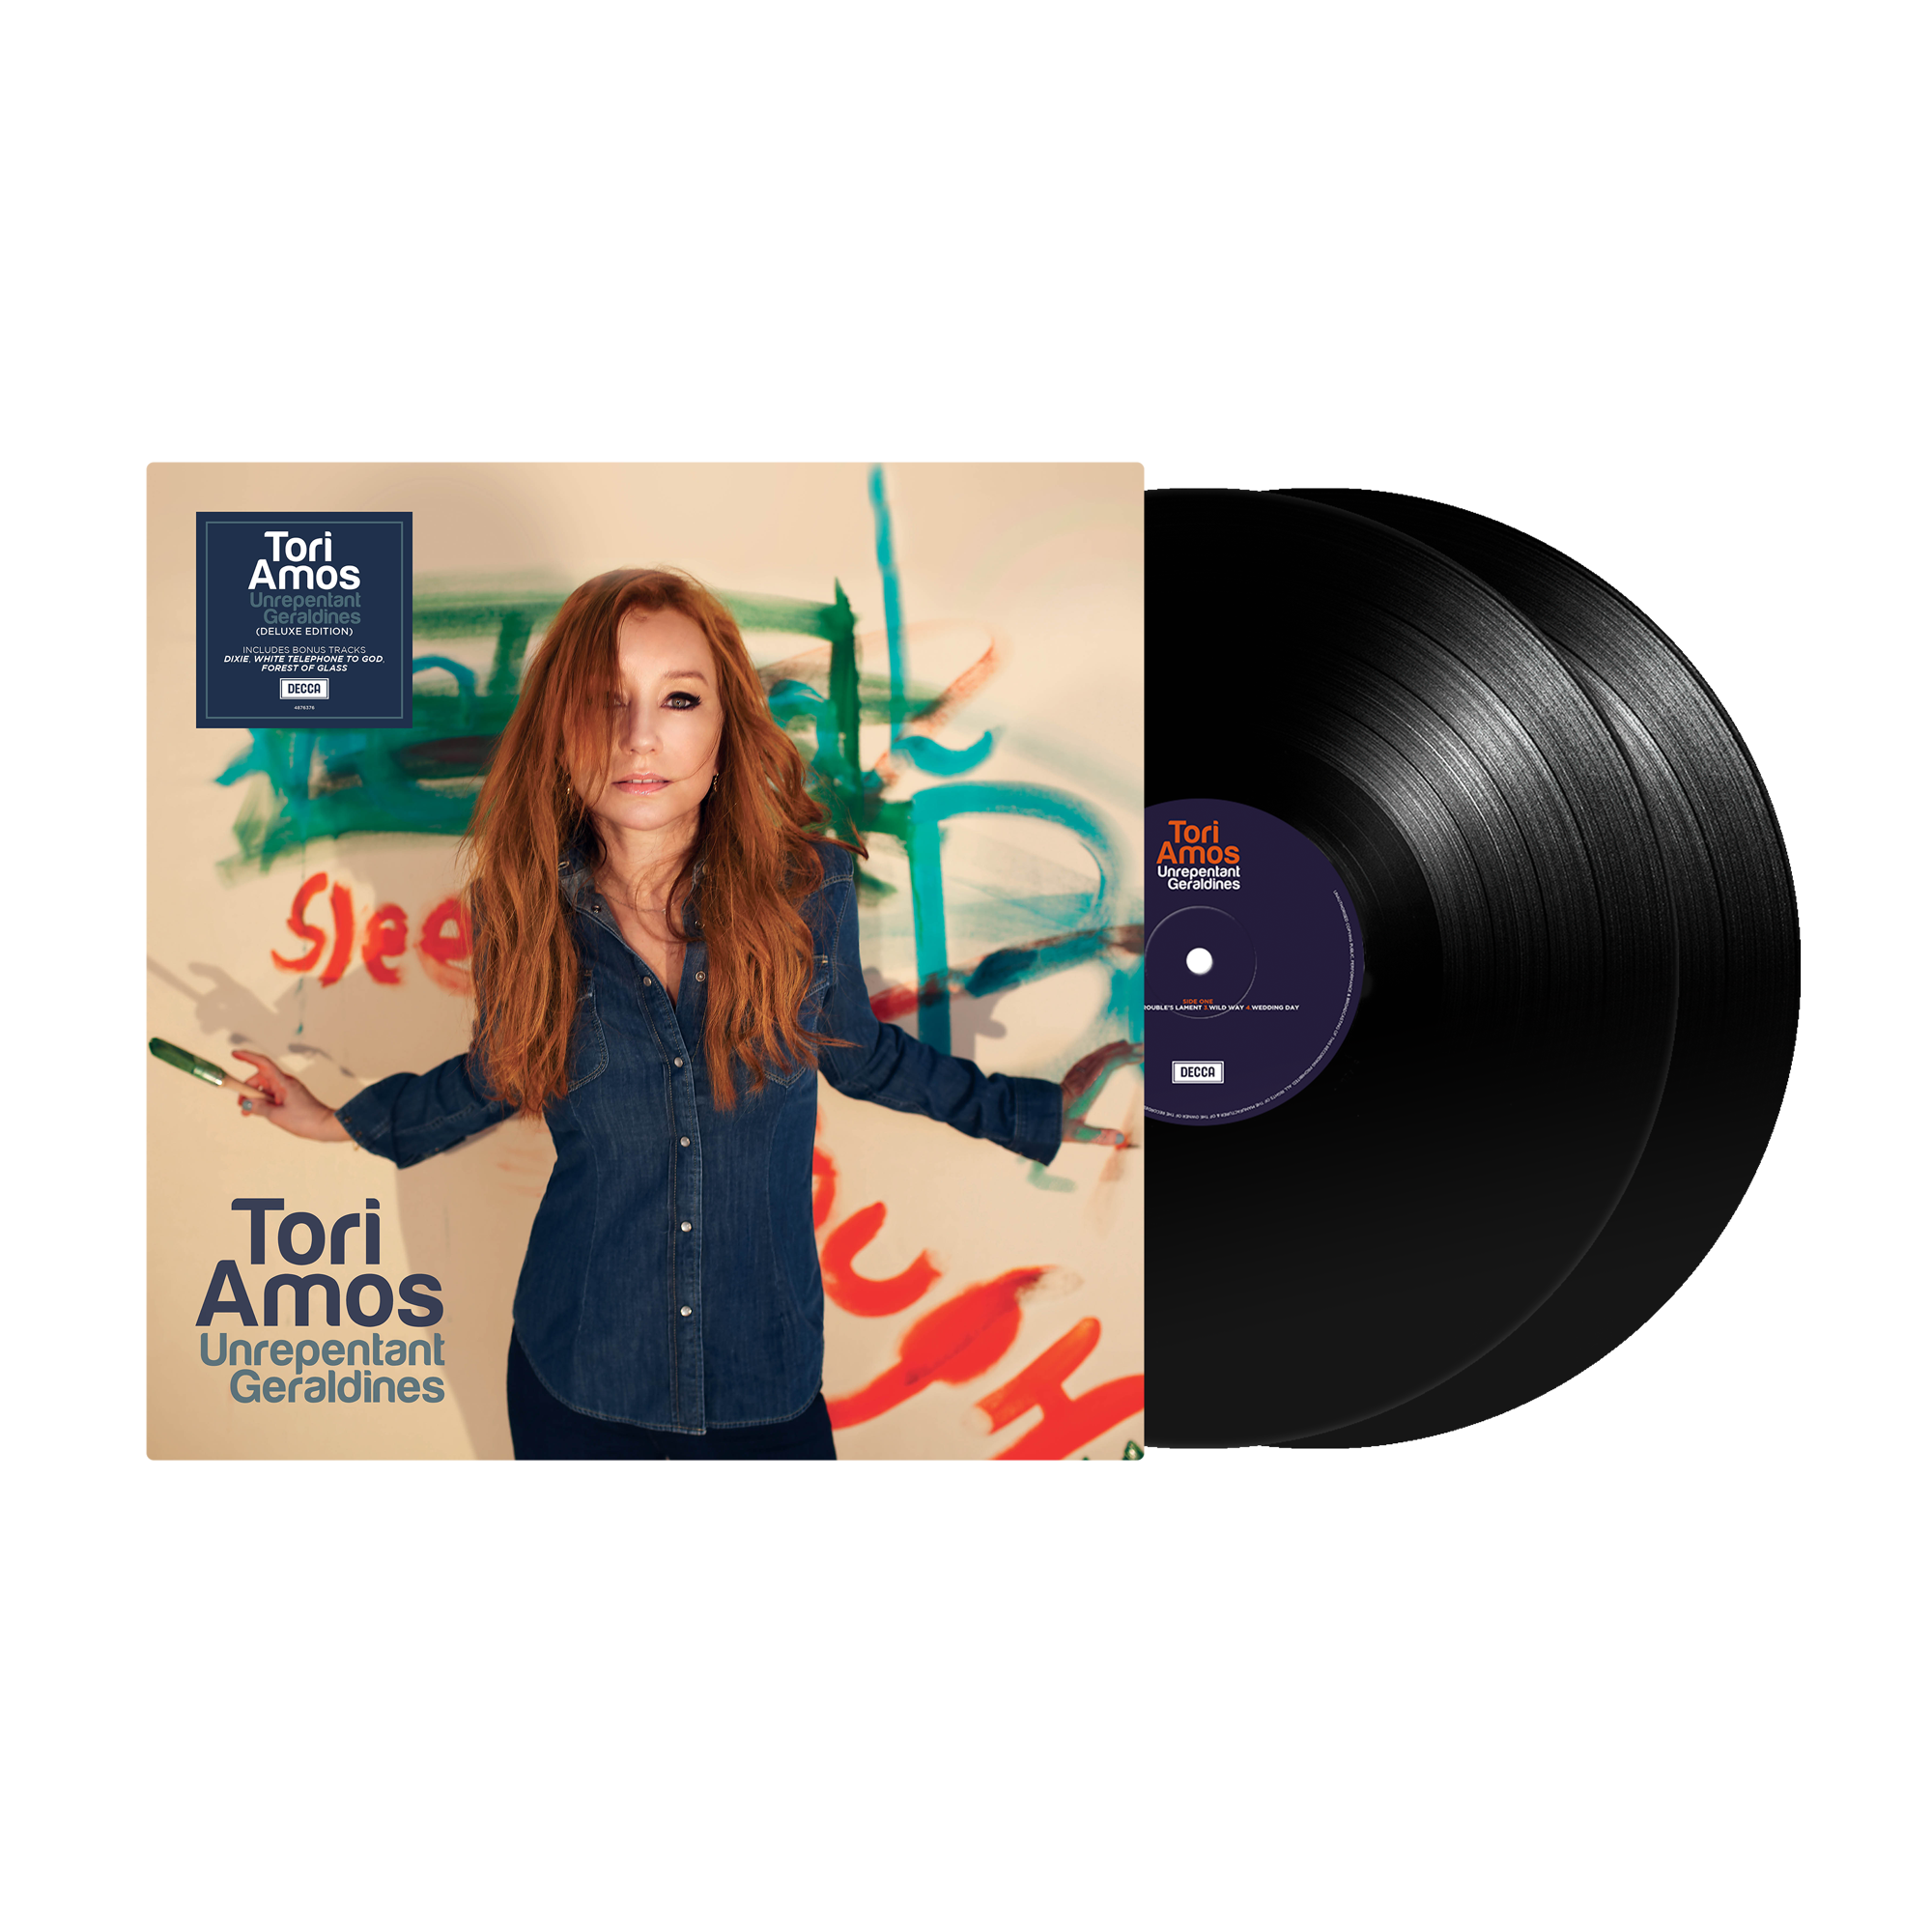 Tori Amos - Unrepentant Geraldines: Deluxe Edition 10th Anniversary 2LP